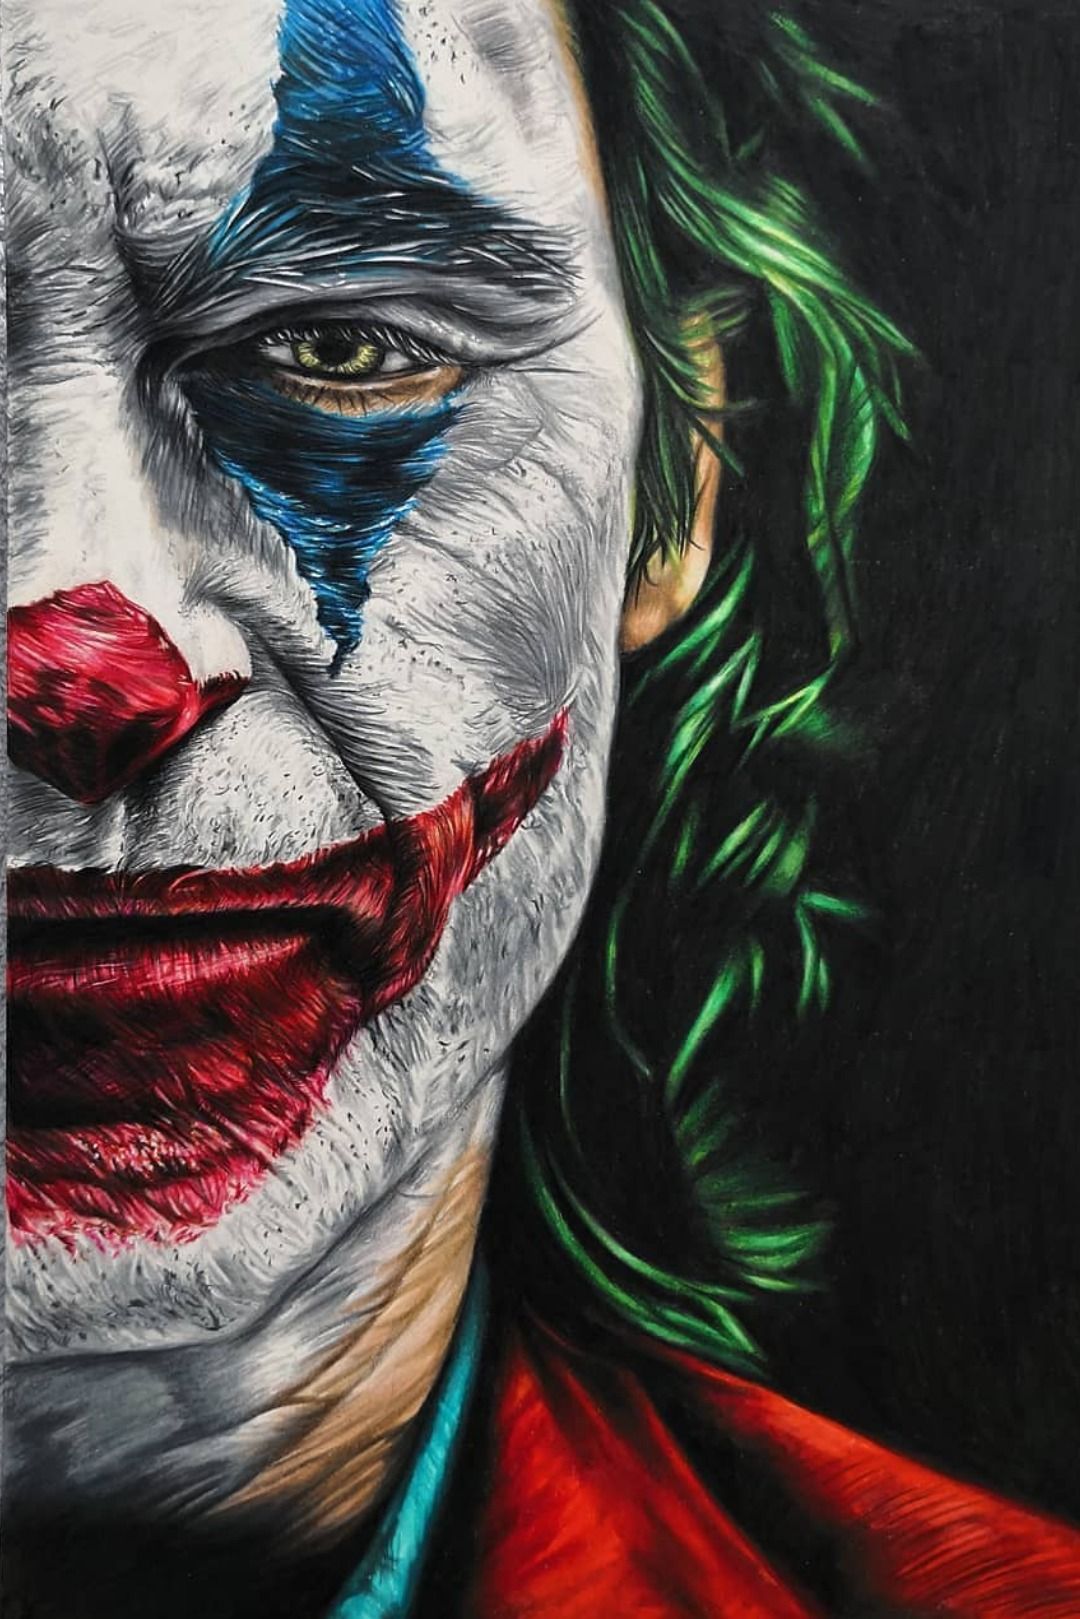 Joker Face Wallpaper Free Joker Face Background